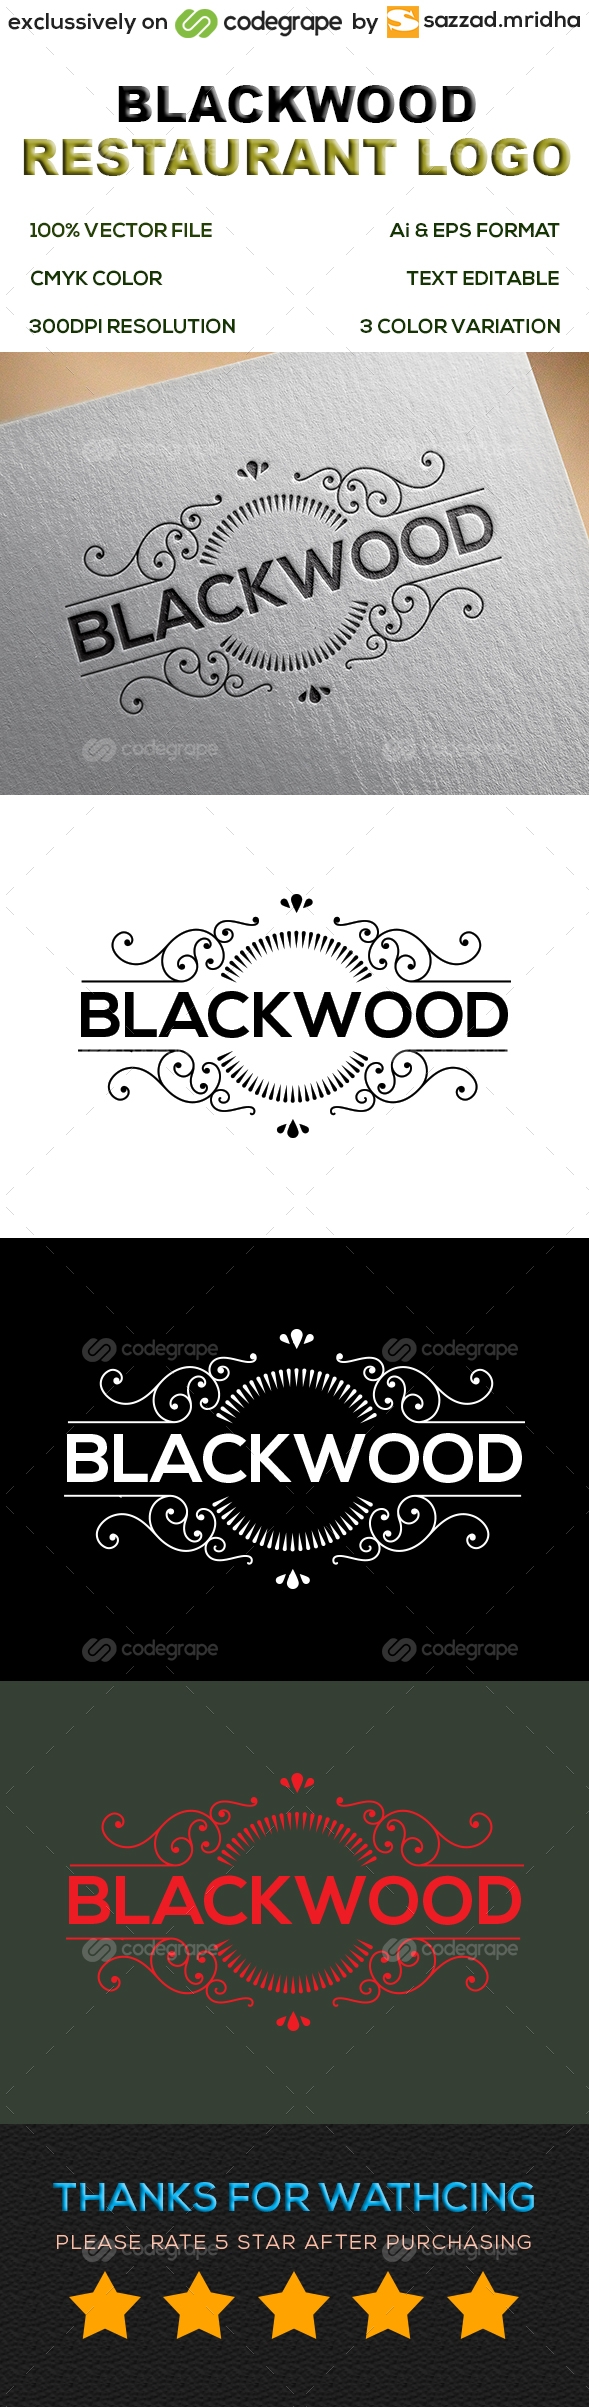 BLACKWOOD Restaurant Logo